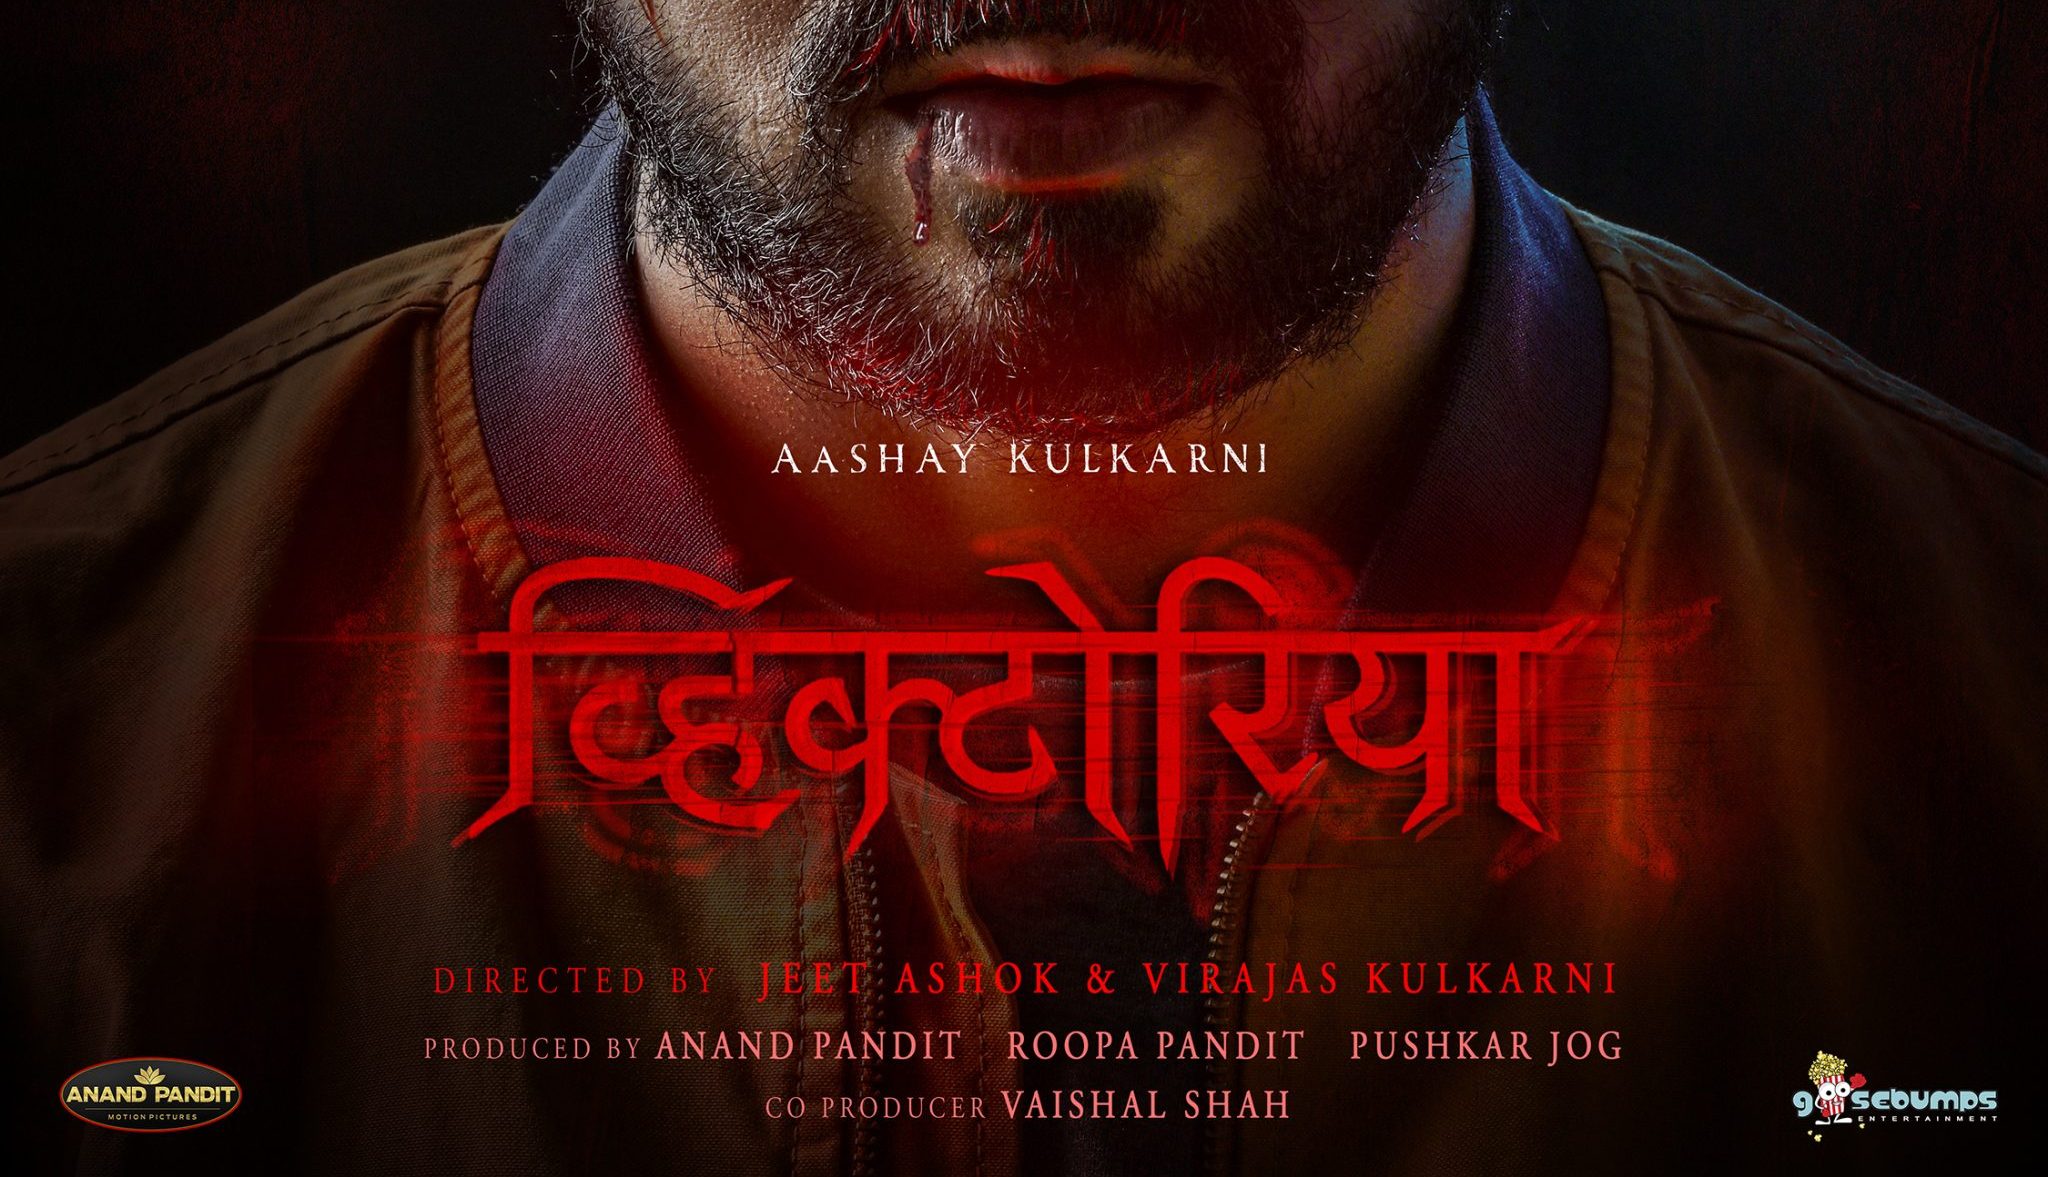 Producer Anand Pandit and actor Pushkar Jog reunite for their third Marathi film “Victoria”!